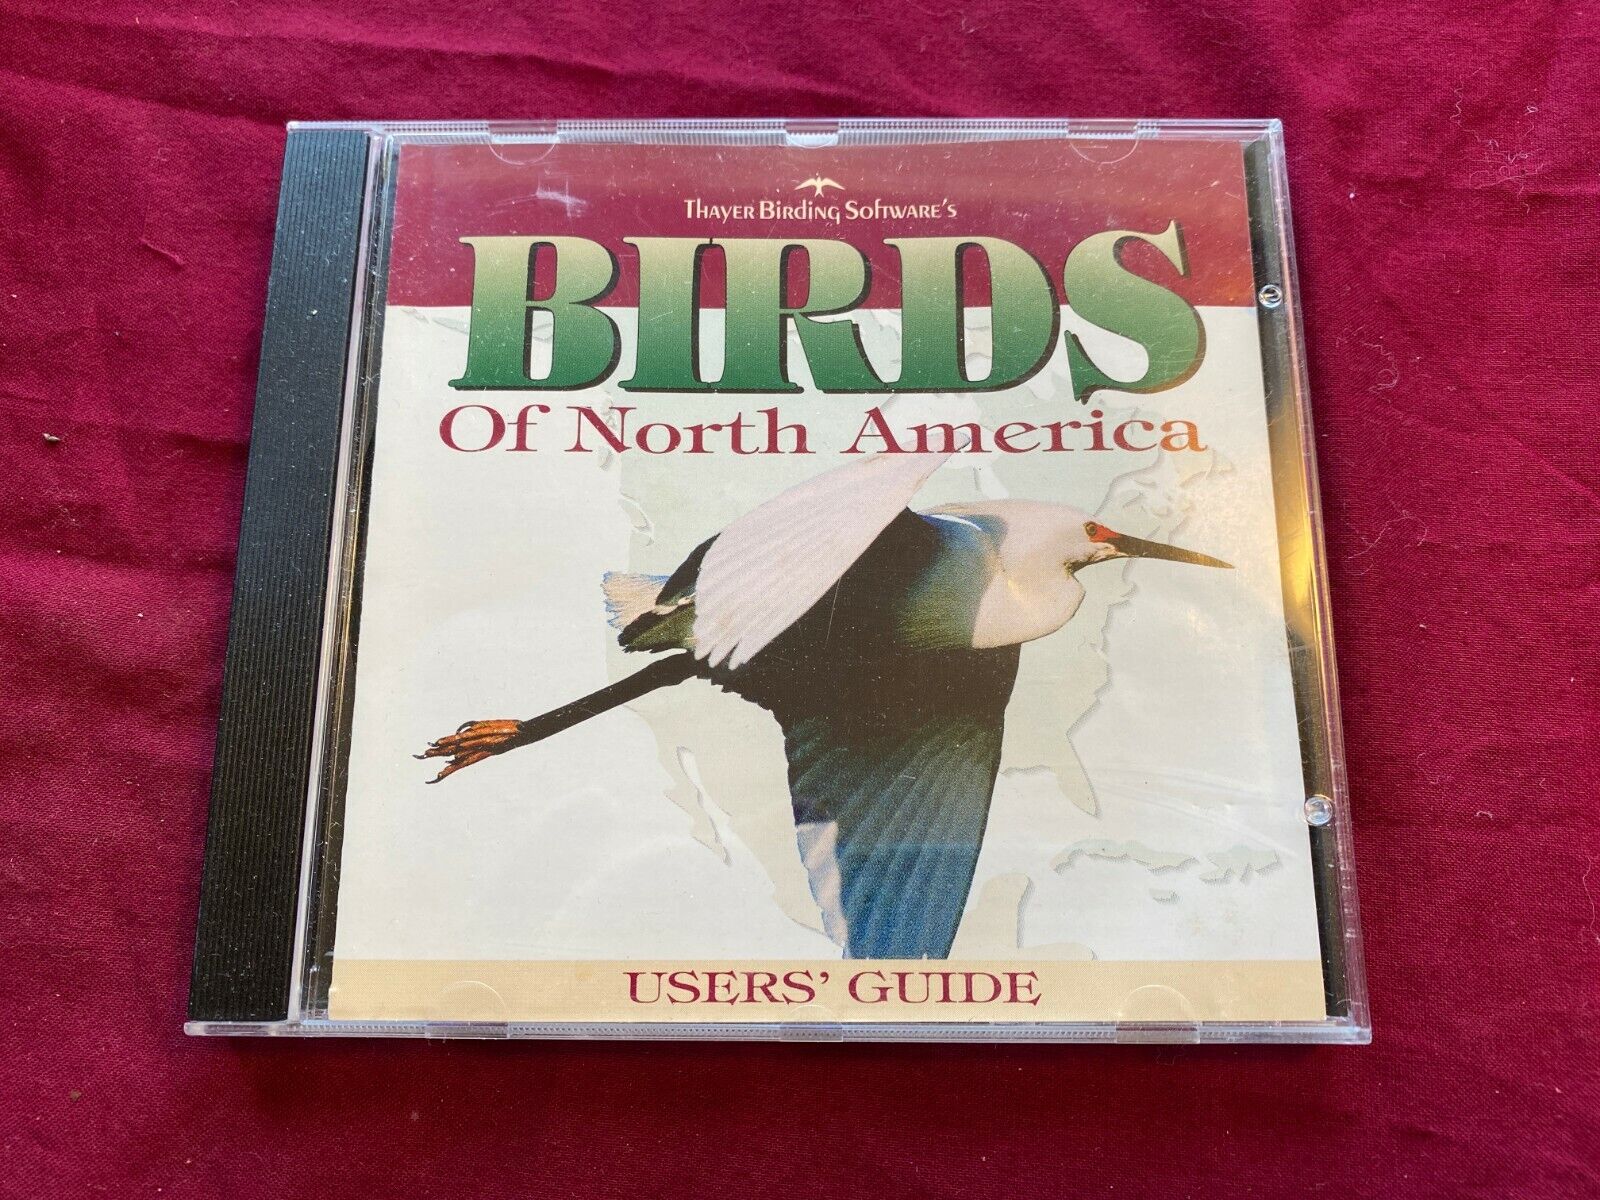 Thayer User Guide Birds of North America,  Windows CD-ROM Ver. 2.5  1998